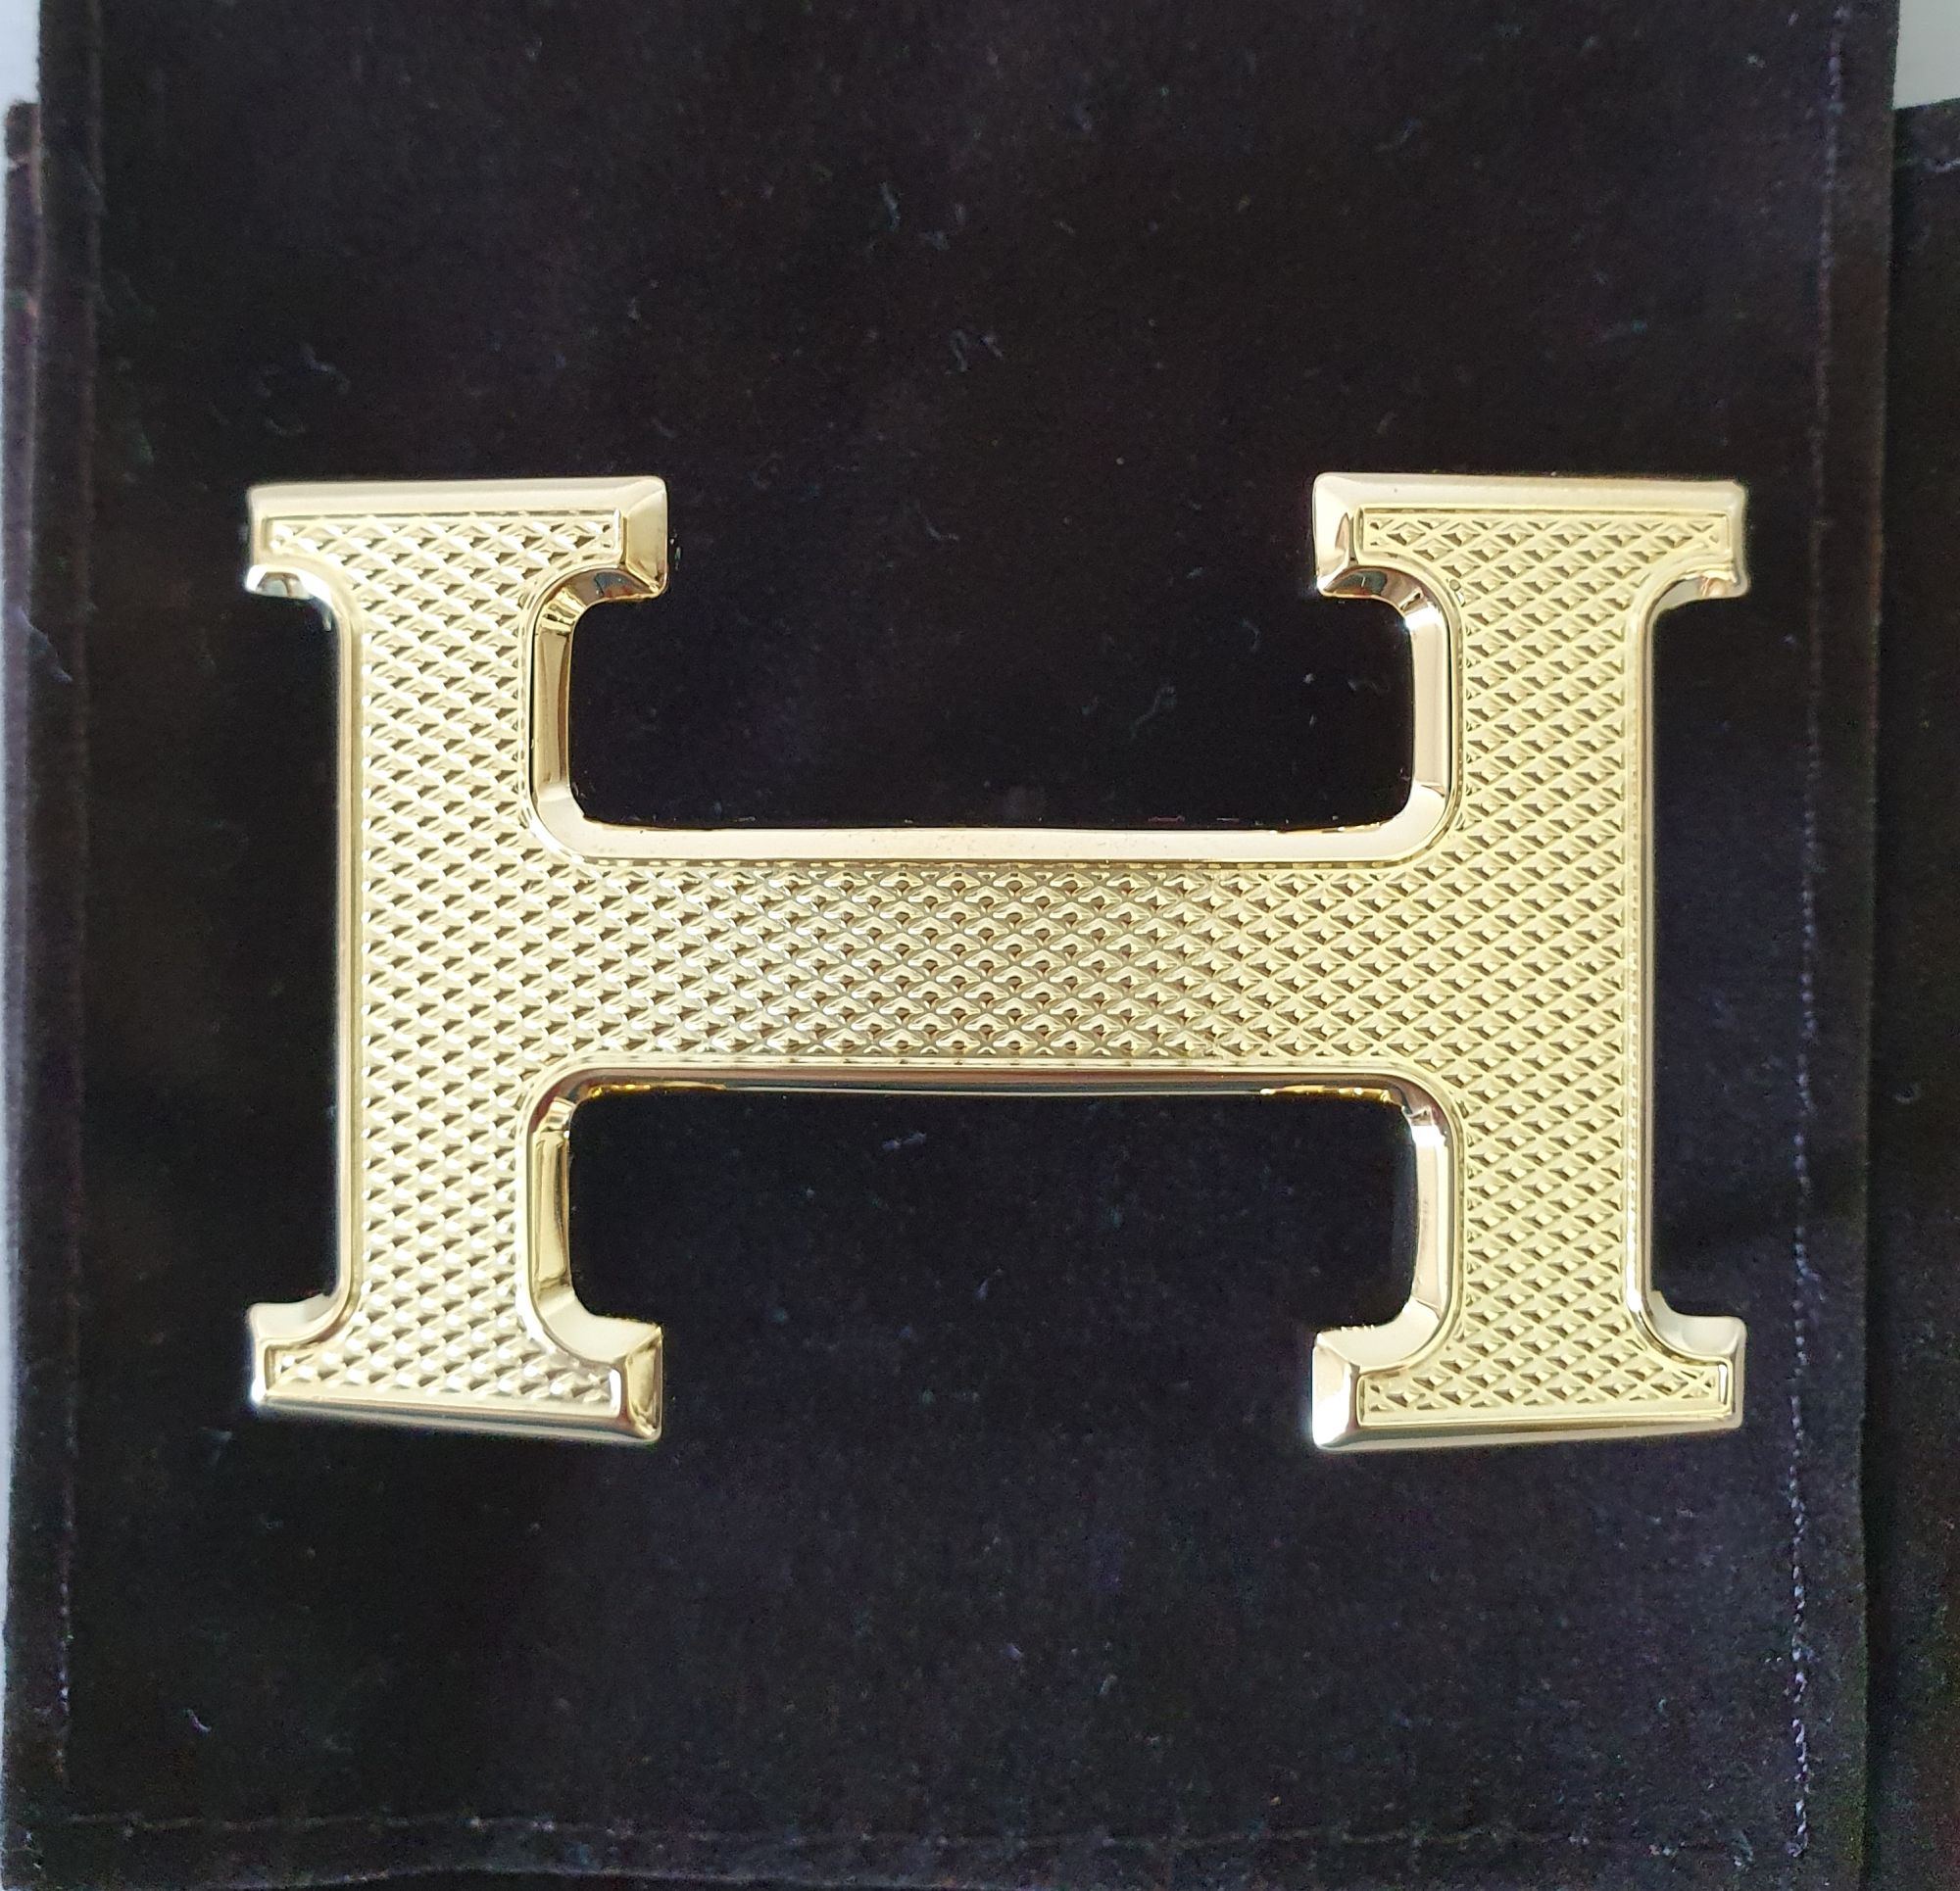 Hermès H guillochée belt buckle in gold plated metal